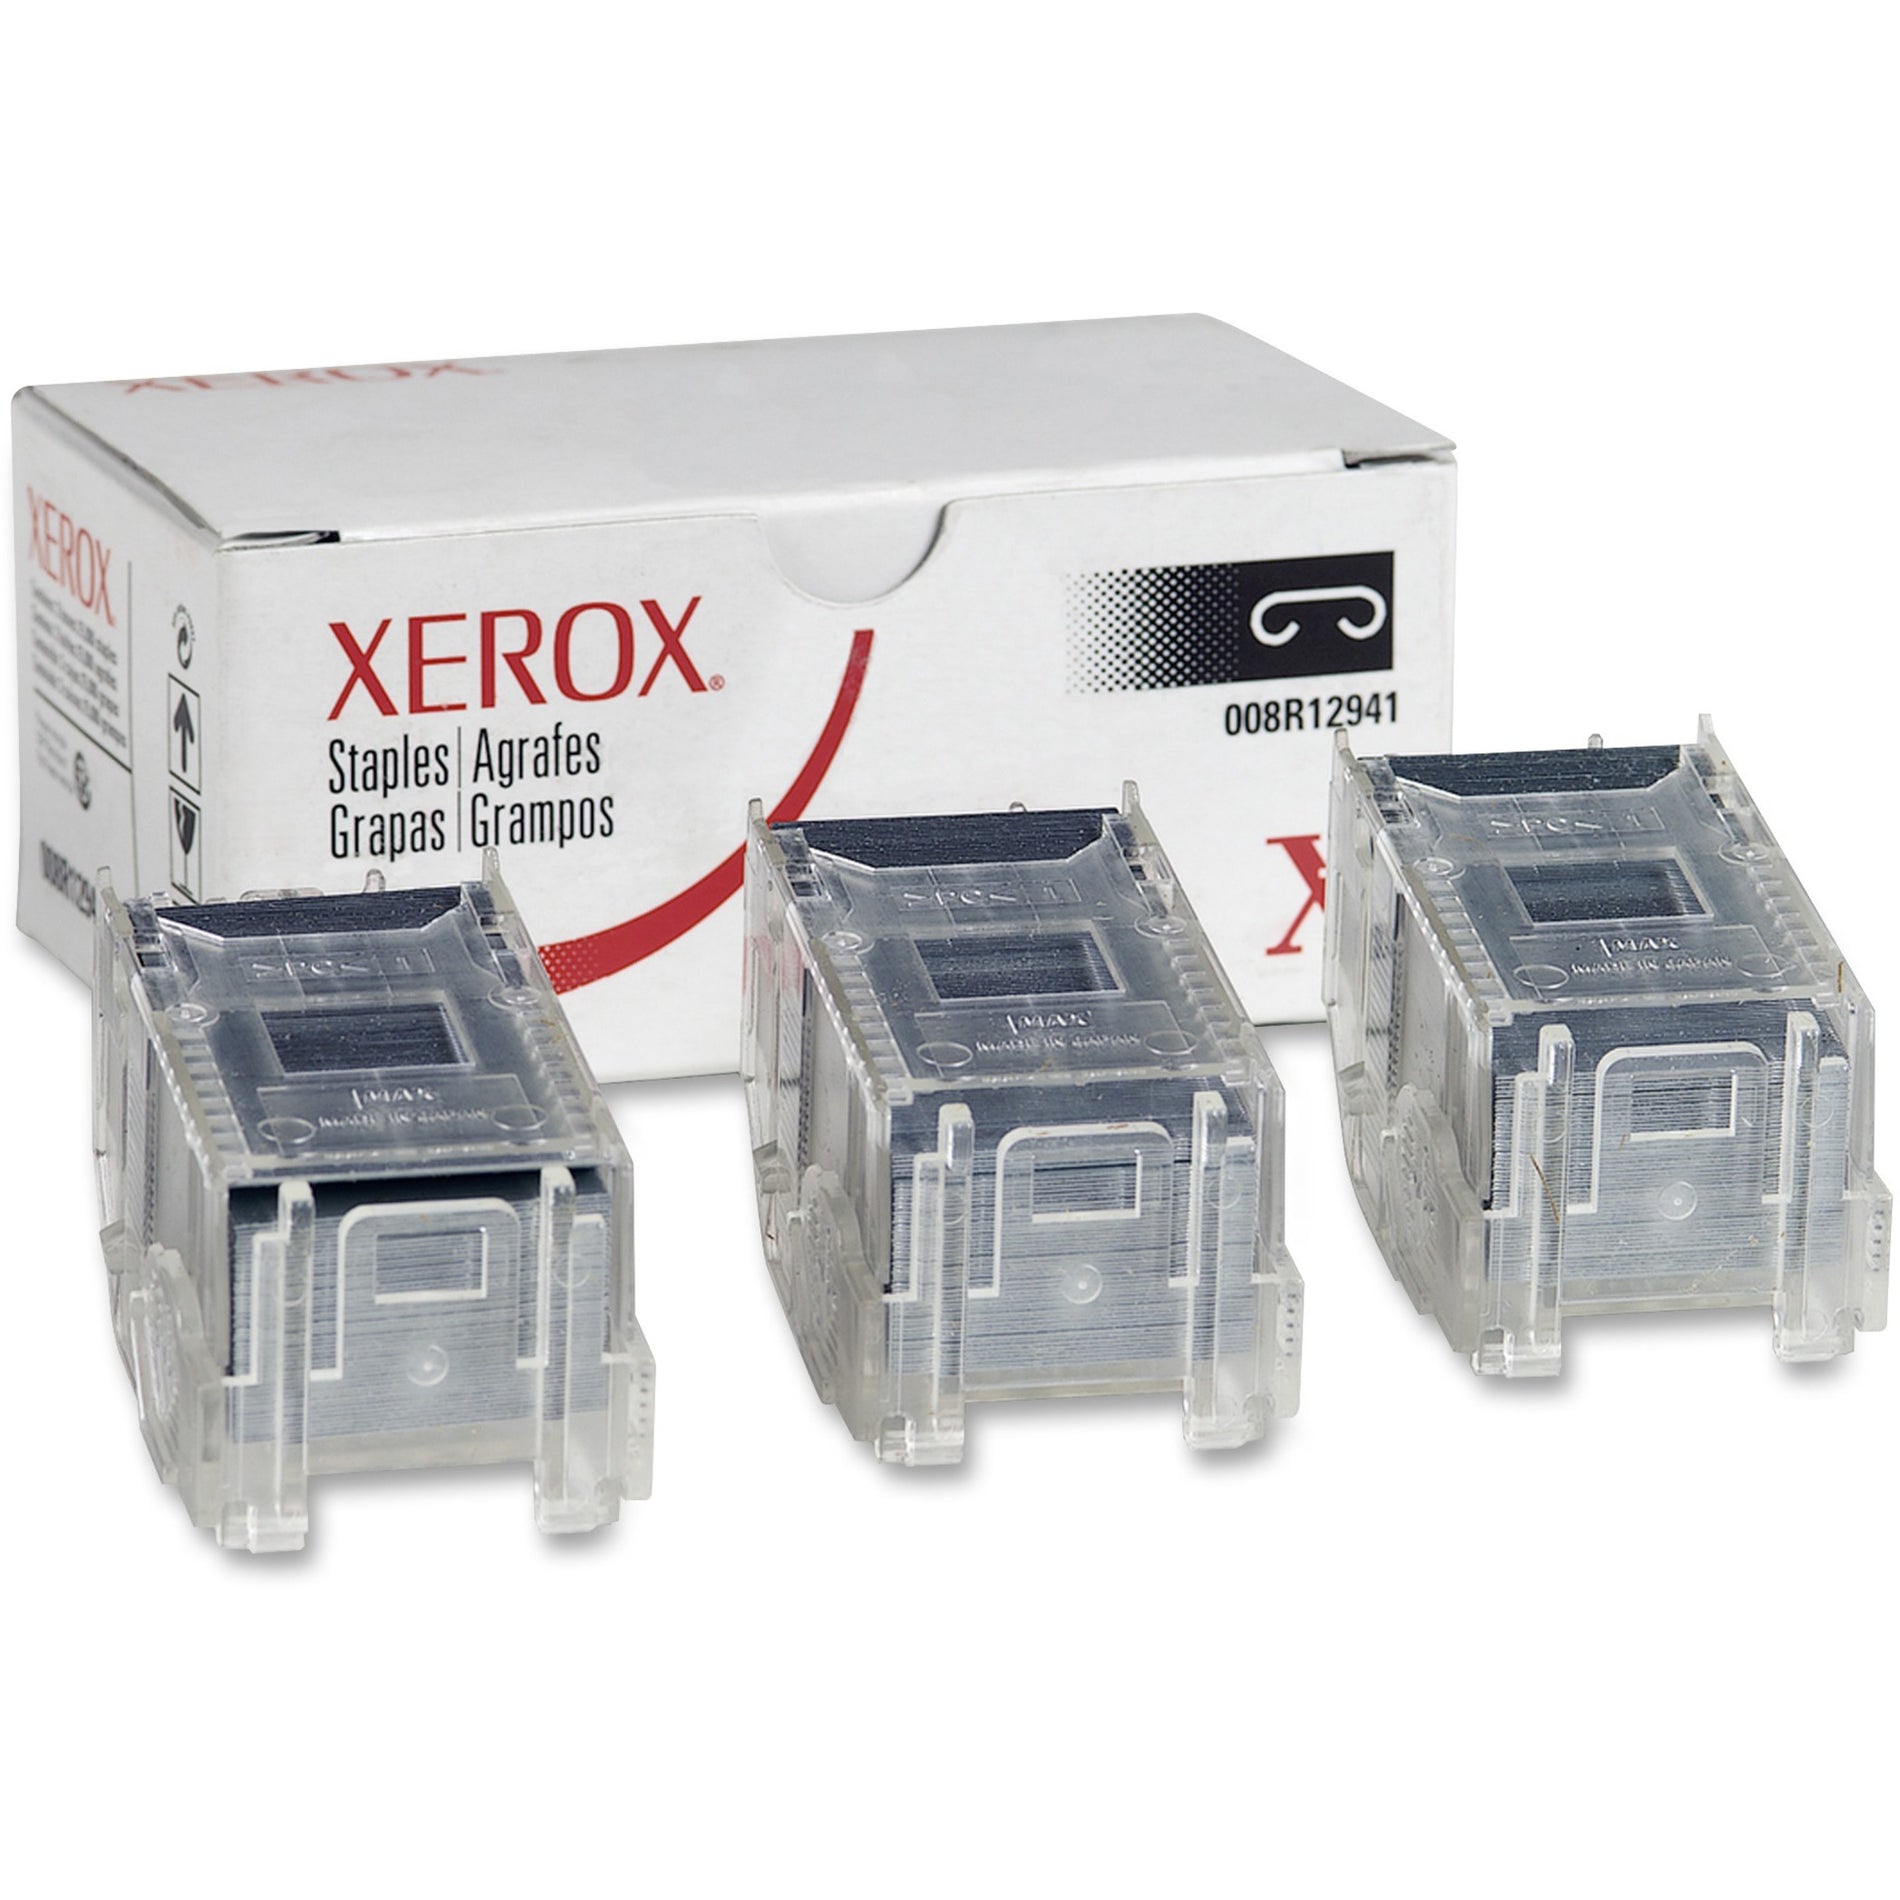 Xerox 008R12941 Office Finisher Main Staple Cartridge Refills, 5000 Per Cartridge, 3-Pack